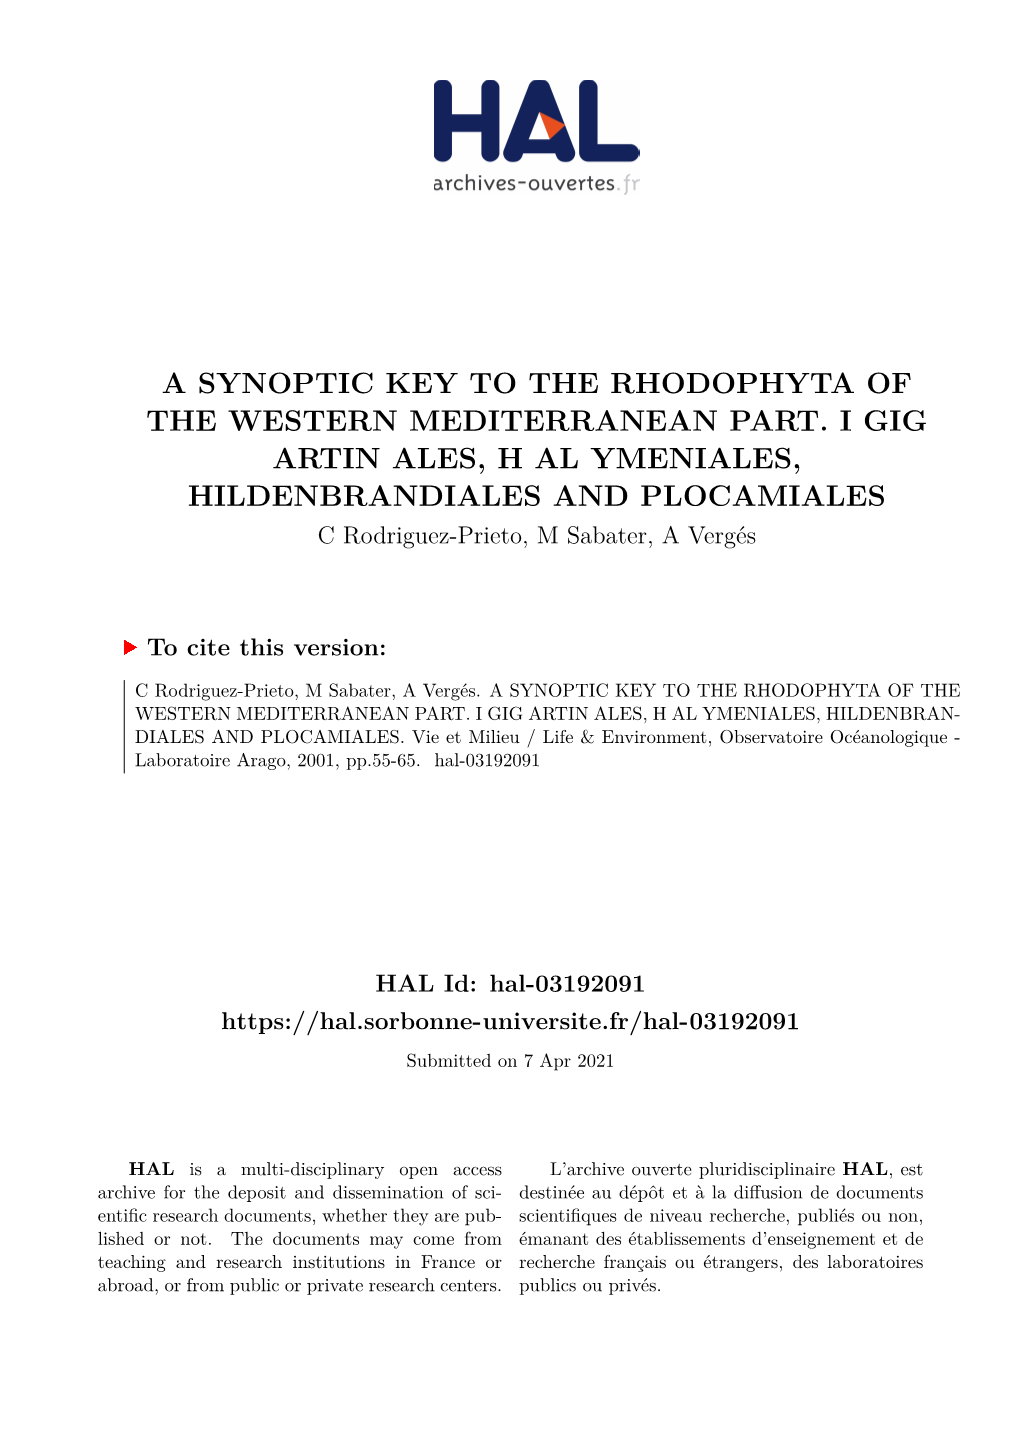 A Synoptic Key to the Rhodophyta of the Western Mediterranean Part. I Gig